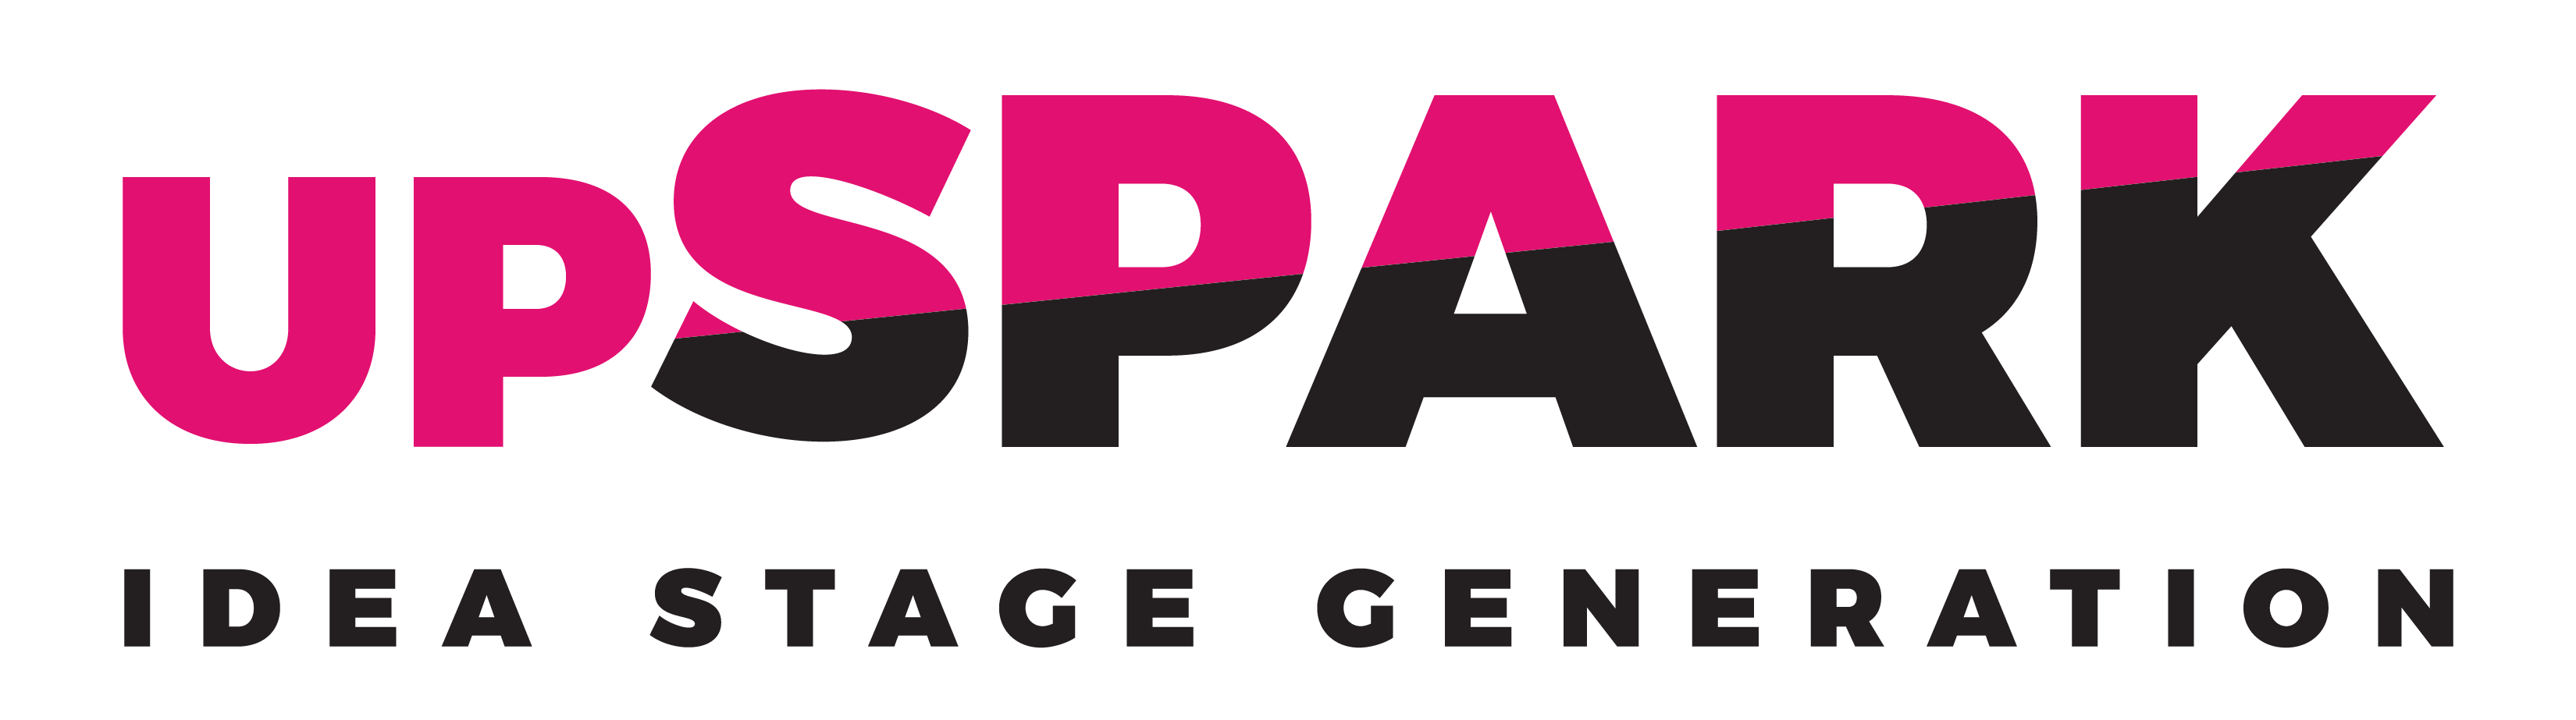 UpSpark Idea Generation (image)